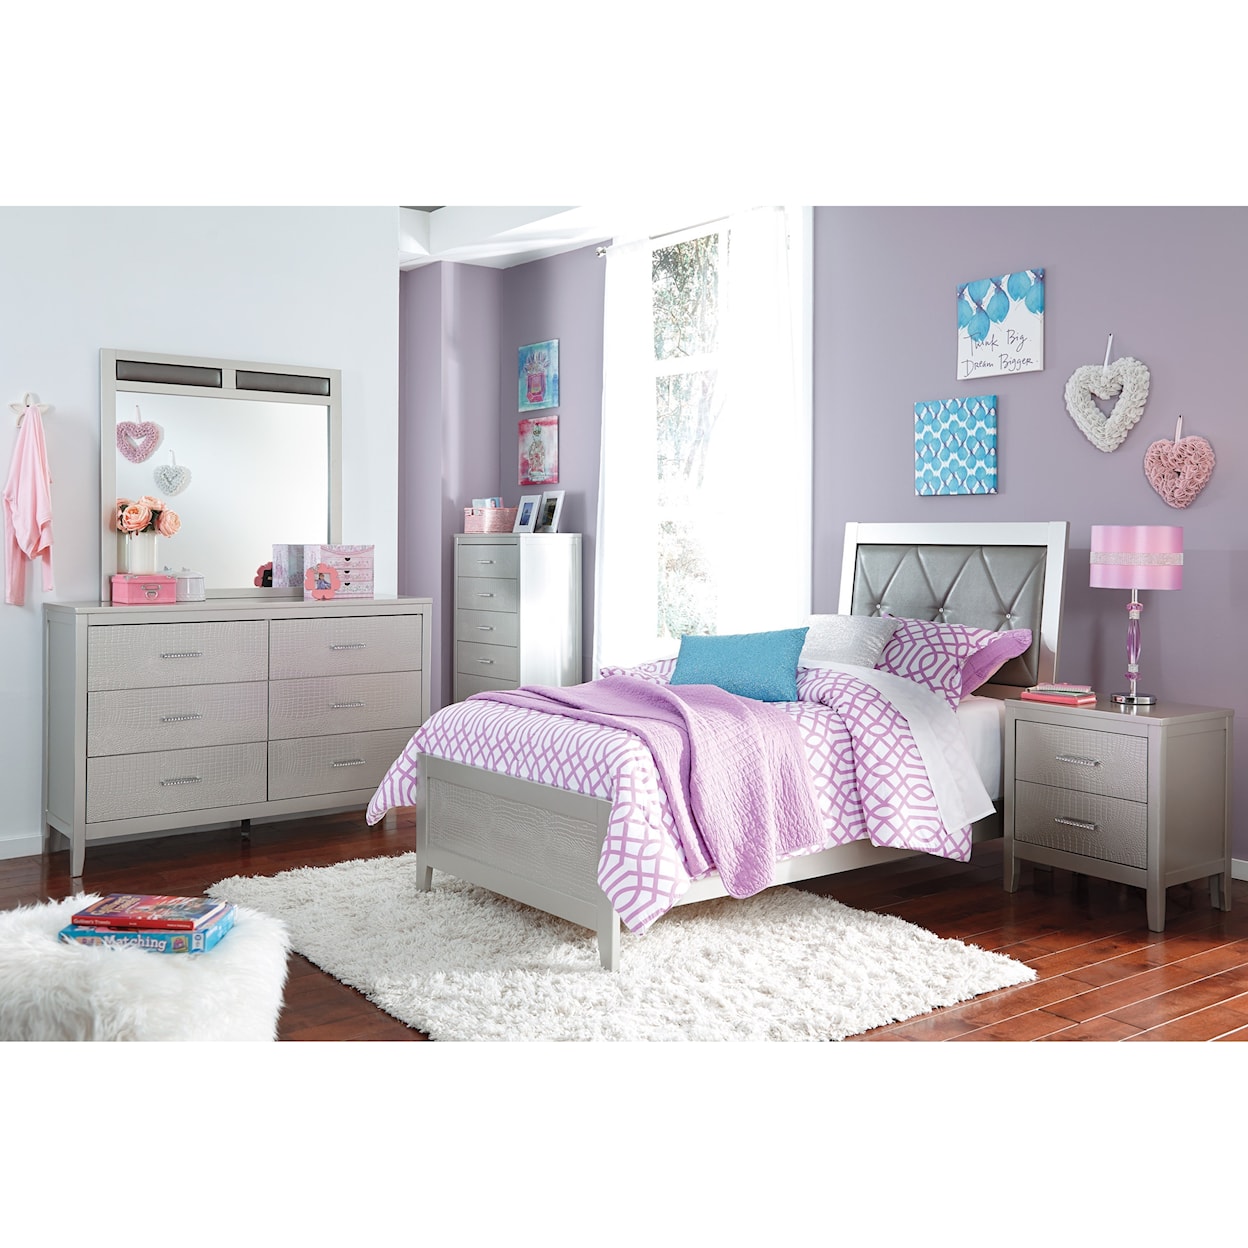 Ashley Furniture Signature Design Olivet Bedroom Mirror